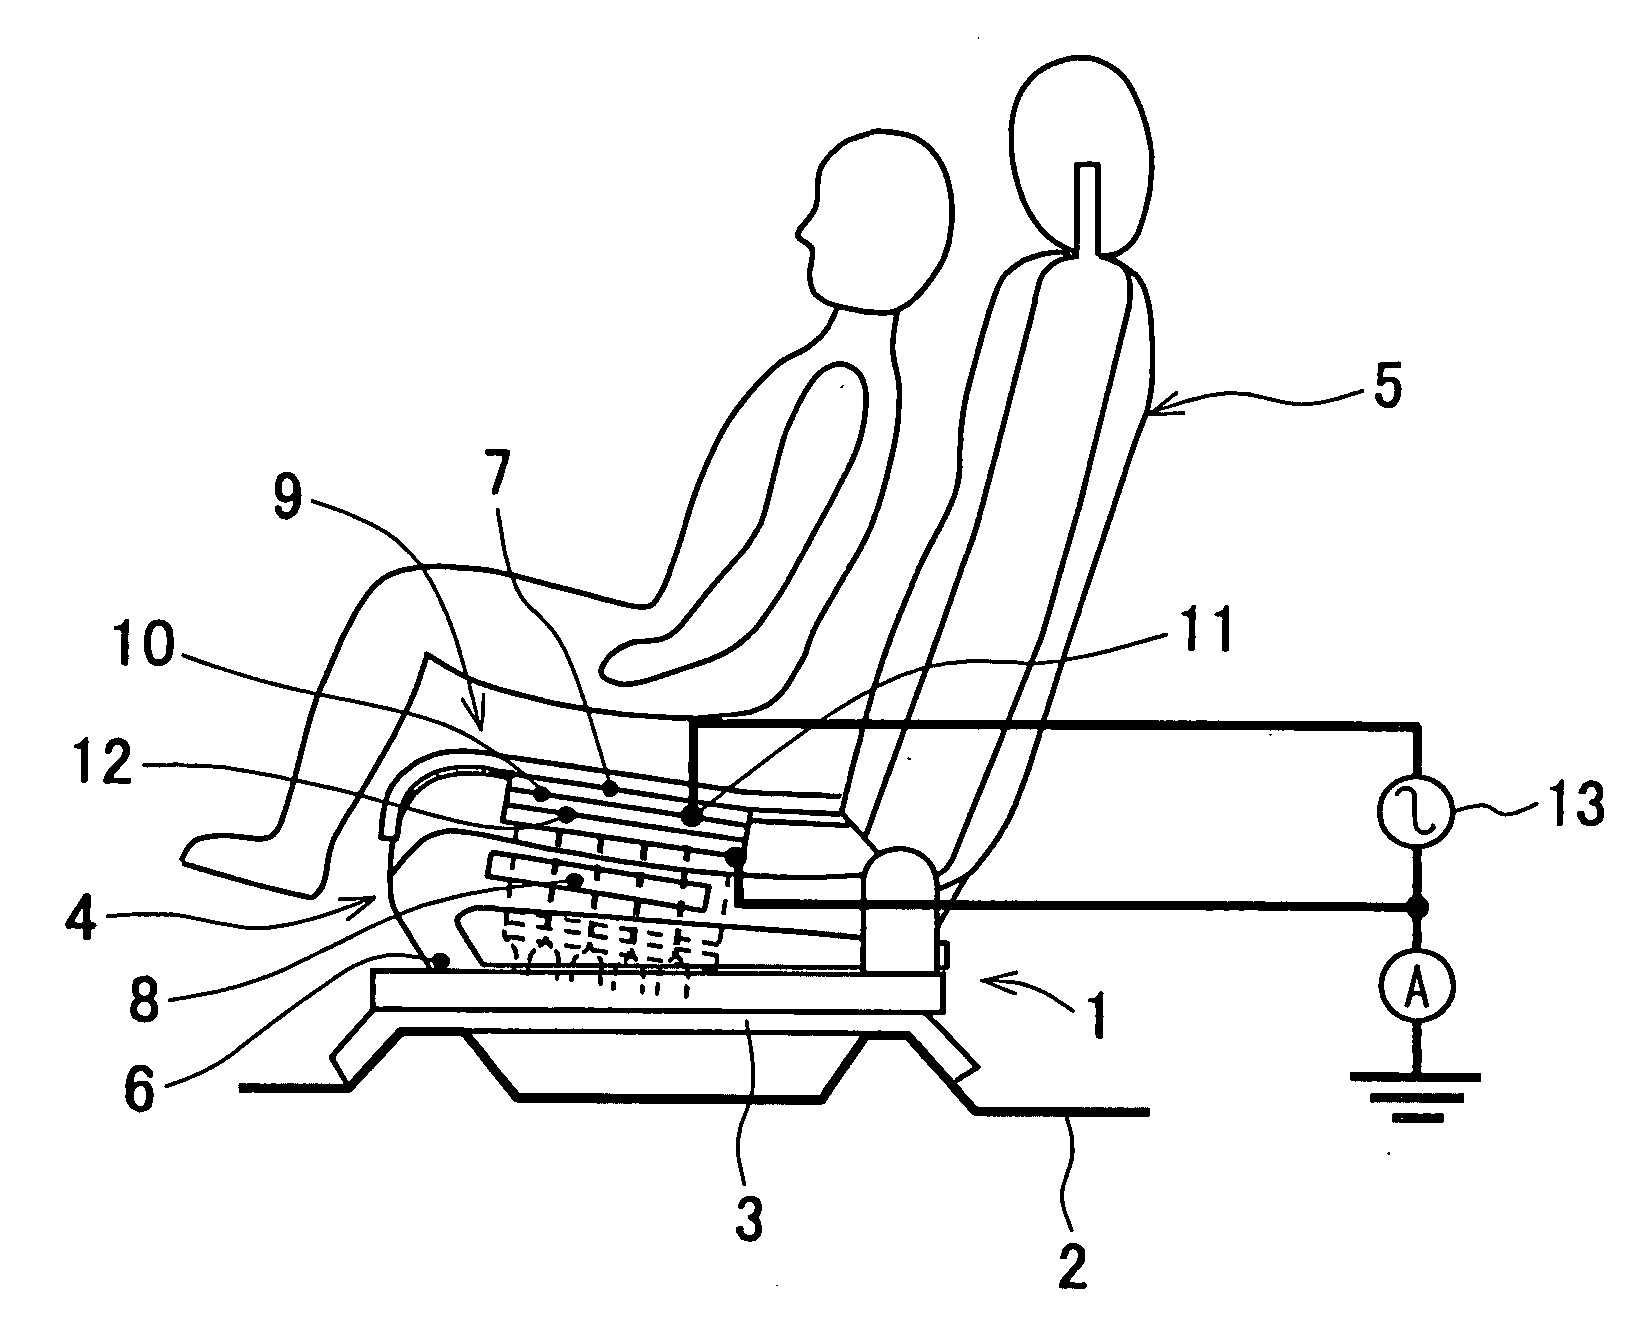 Passenger seat having occupant detector for automotive vehicle